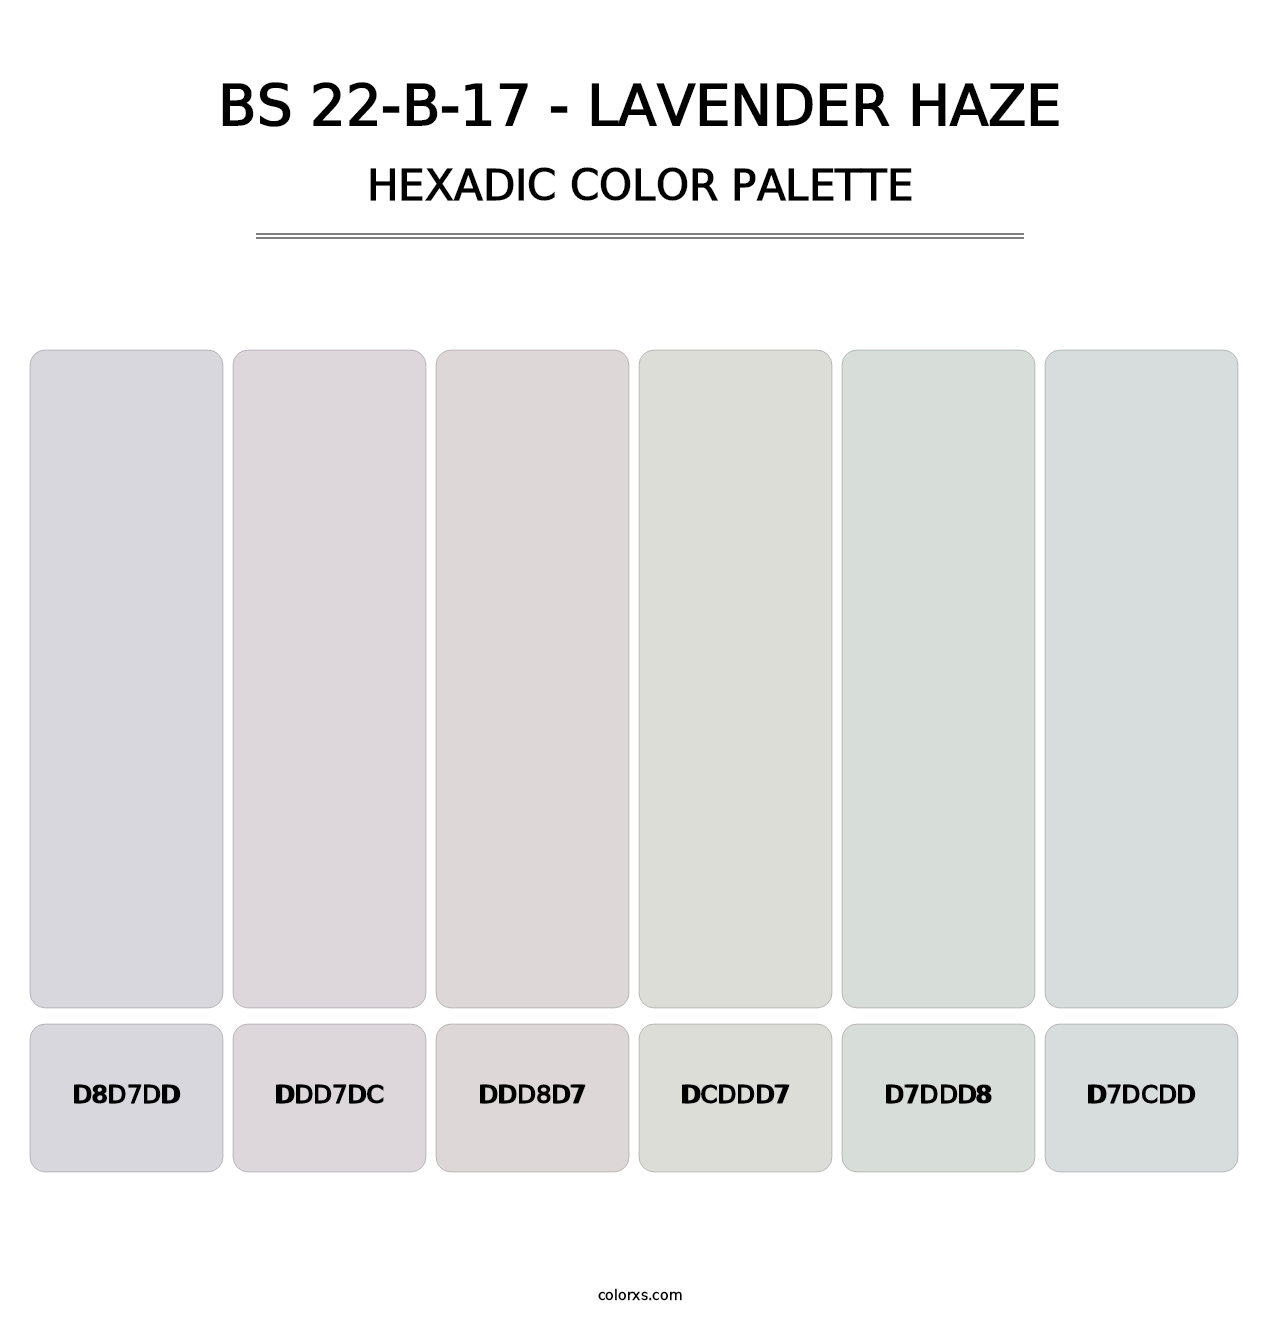 BS 22-B-17 - Lavender Haze - Hexadic Color Palette